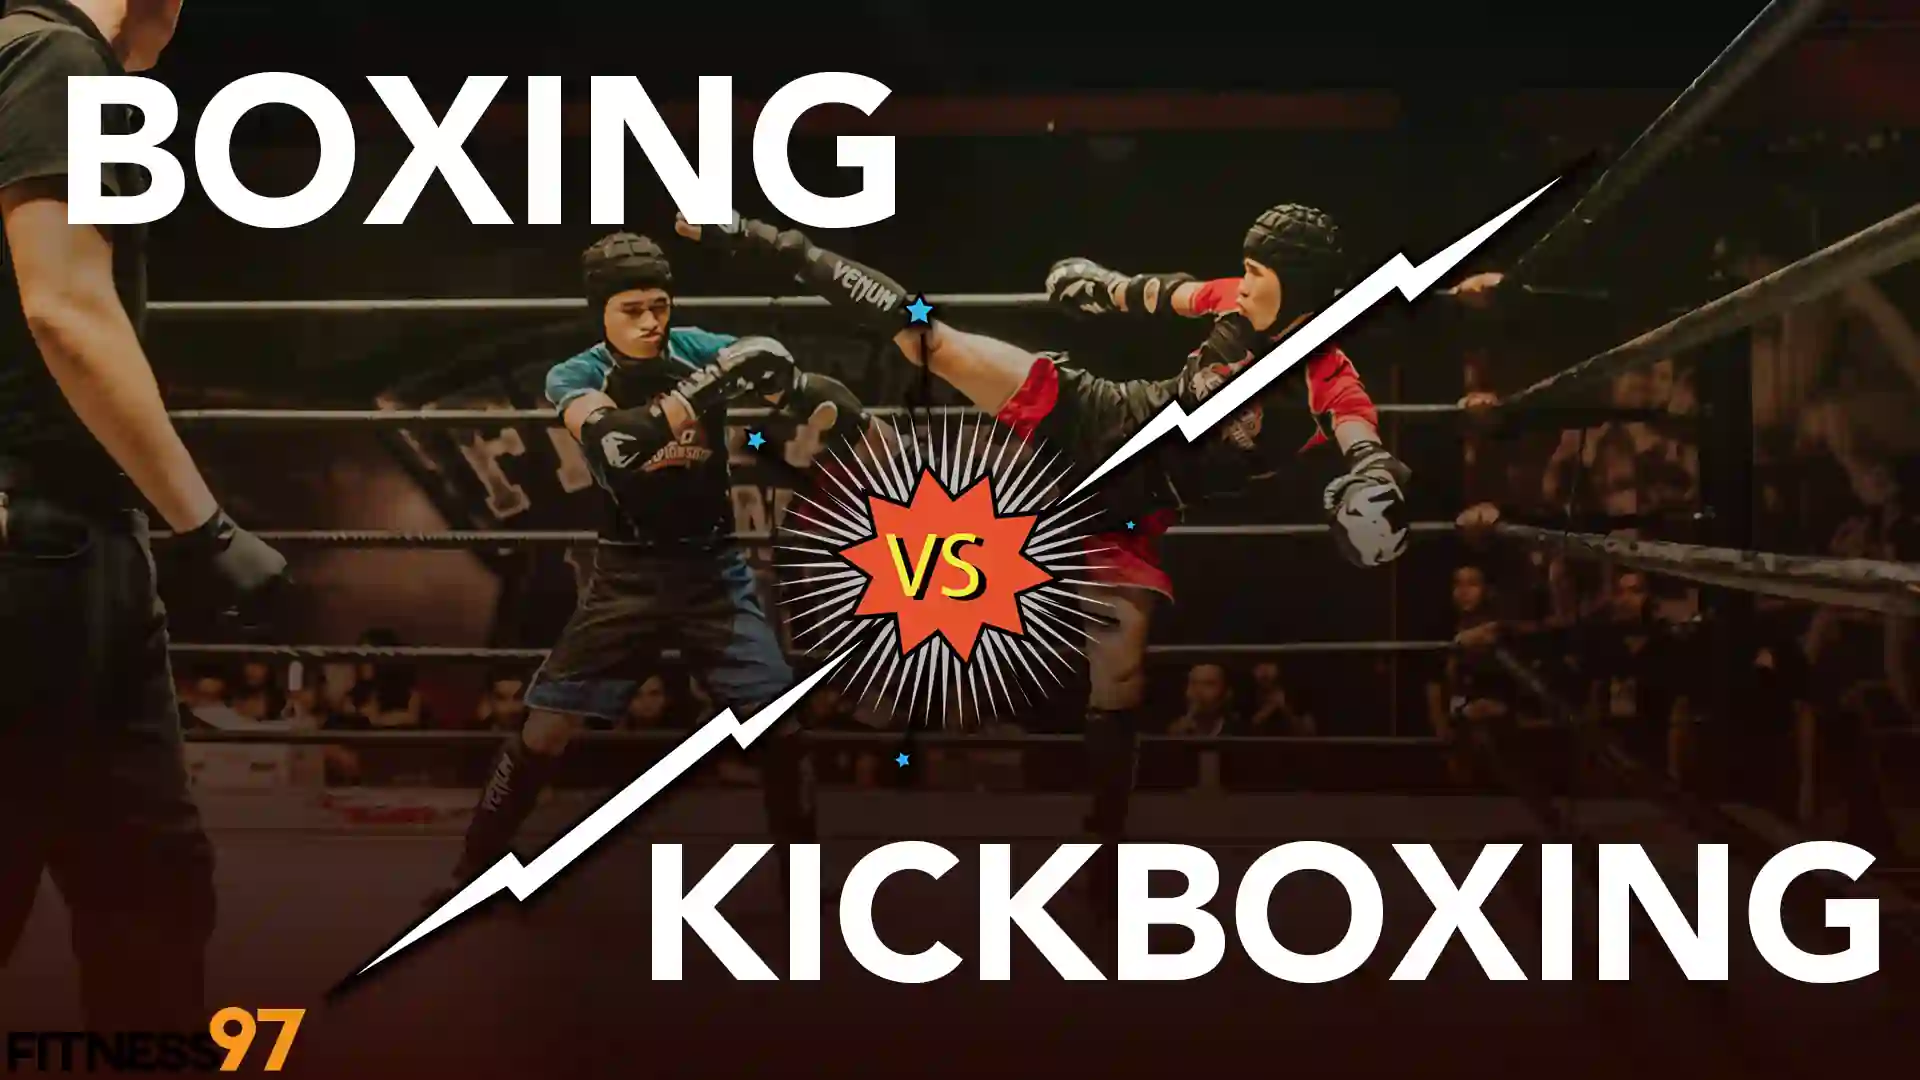 Kickboxing vs boxing